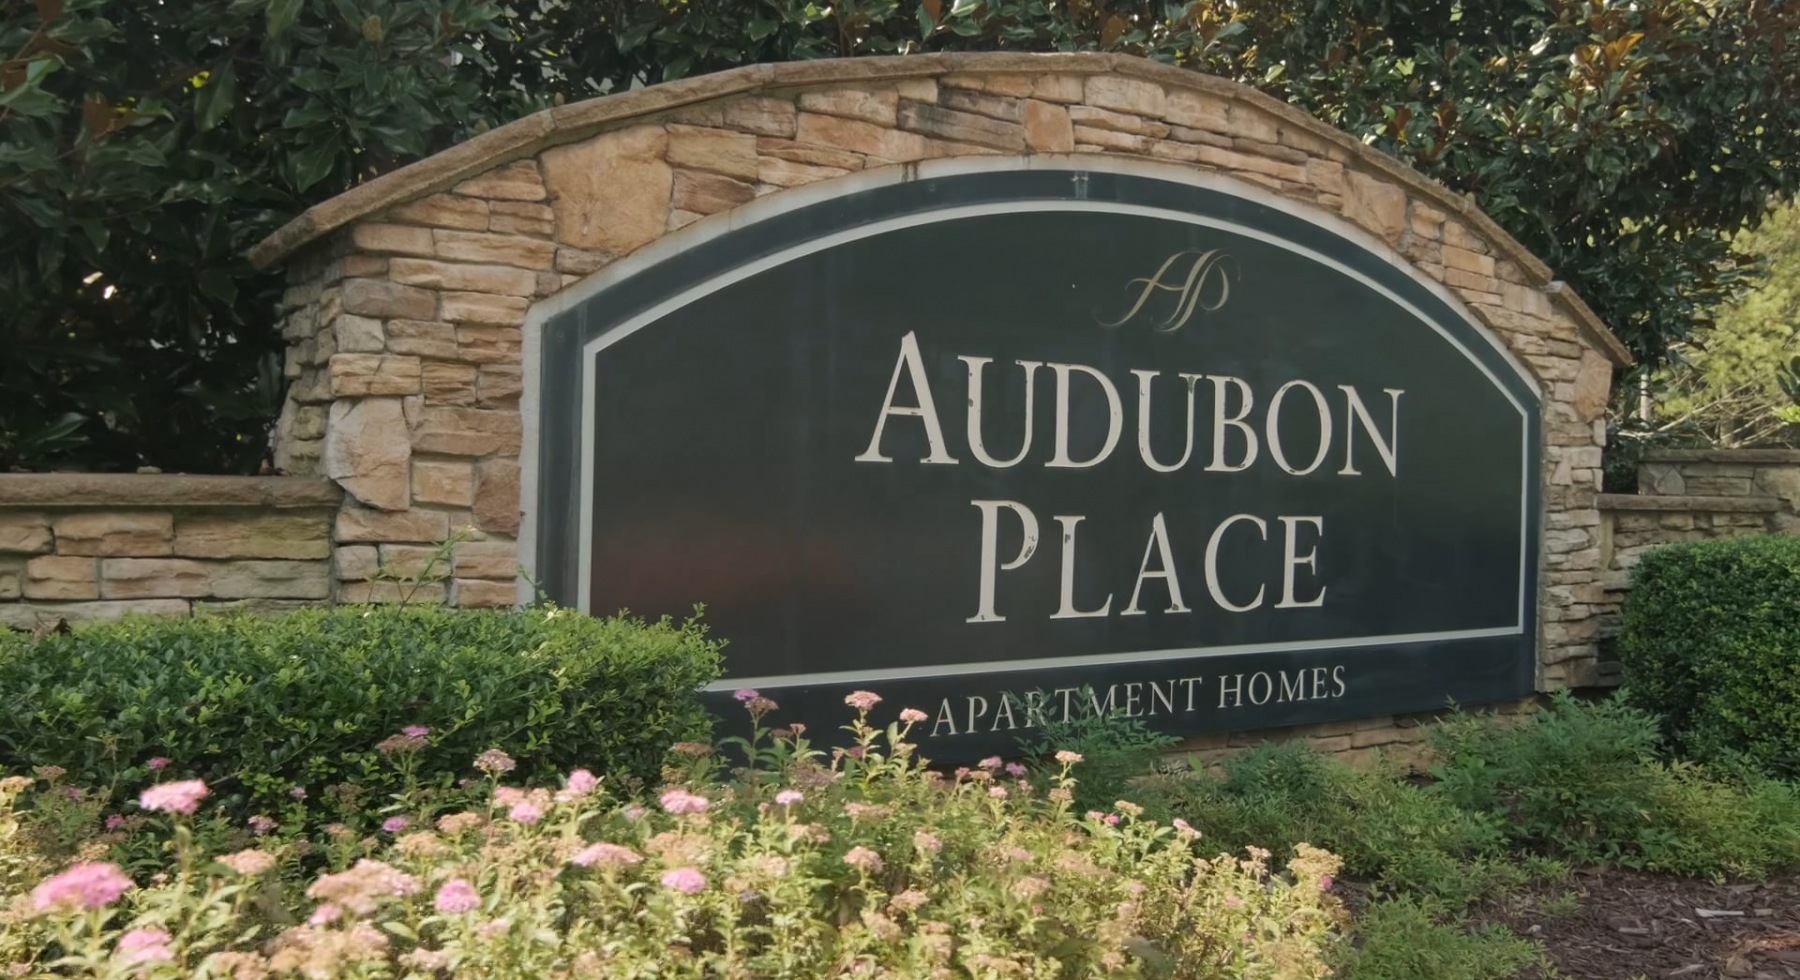 Audubon Place Welcome Video